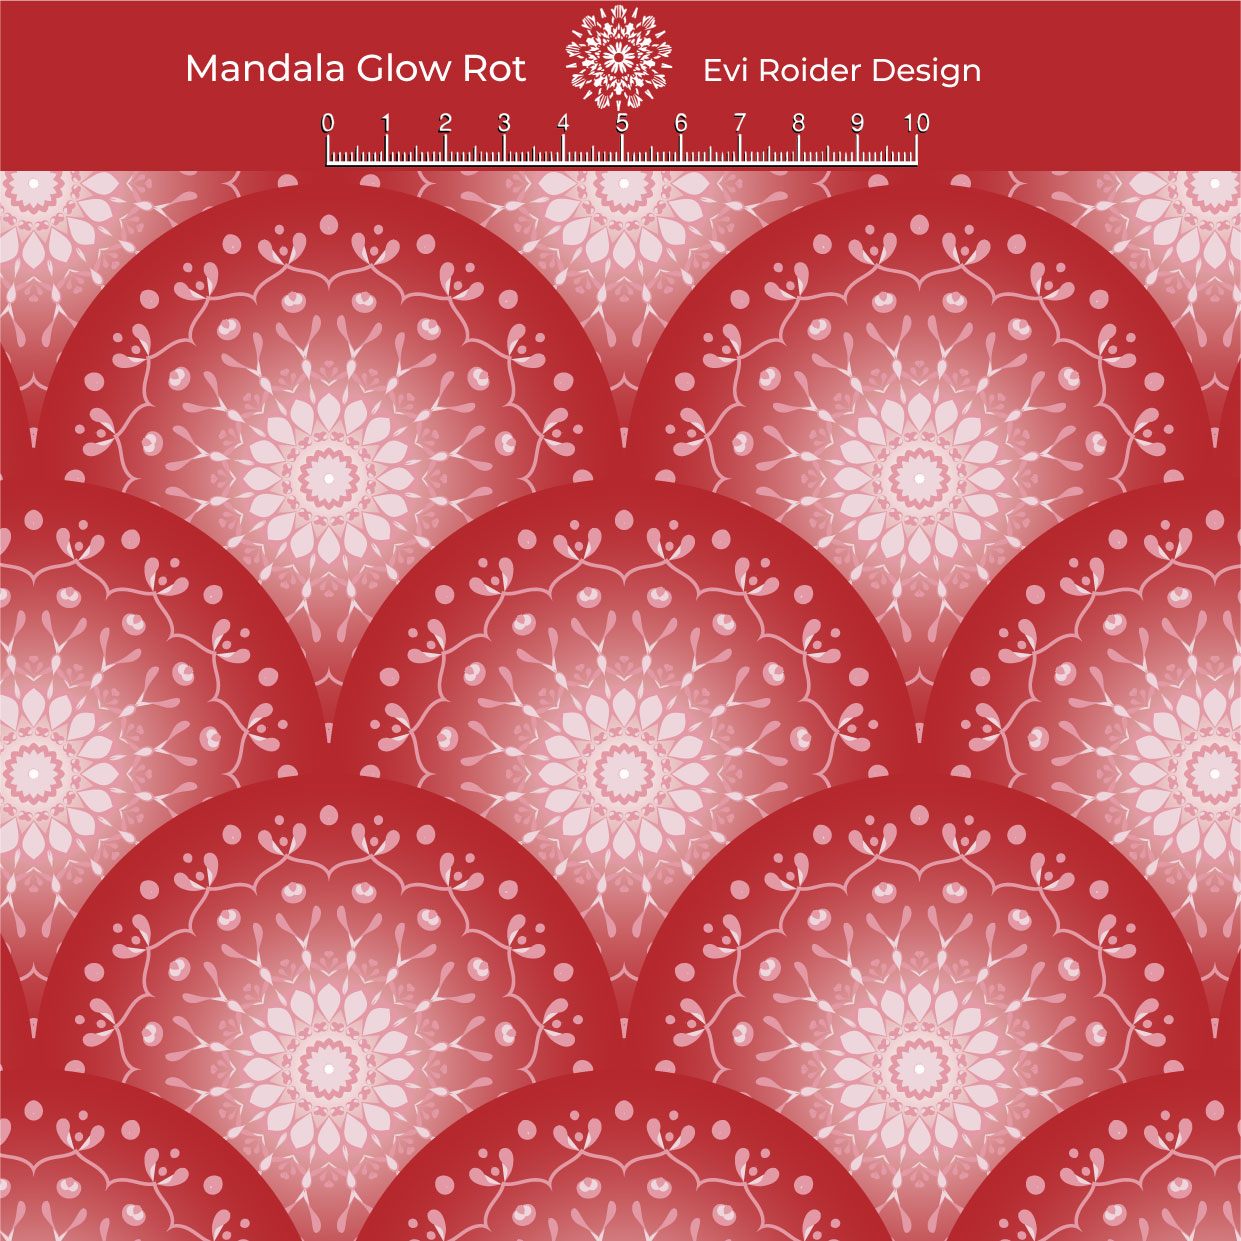 Mandala Glow Rot